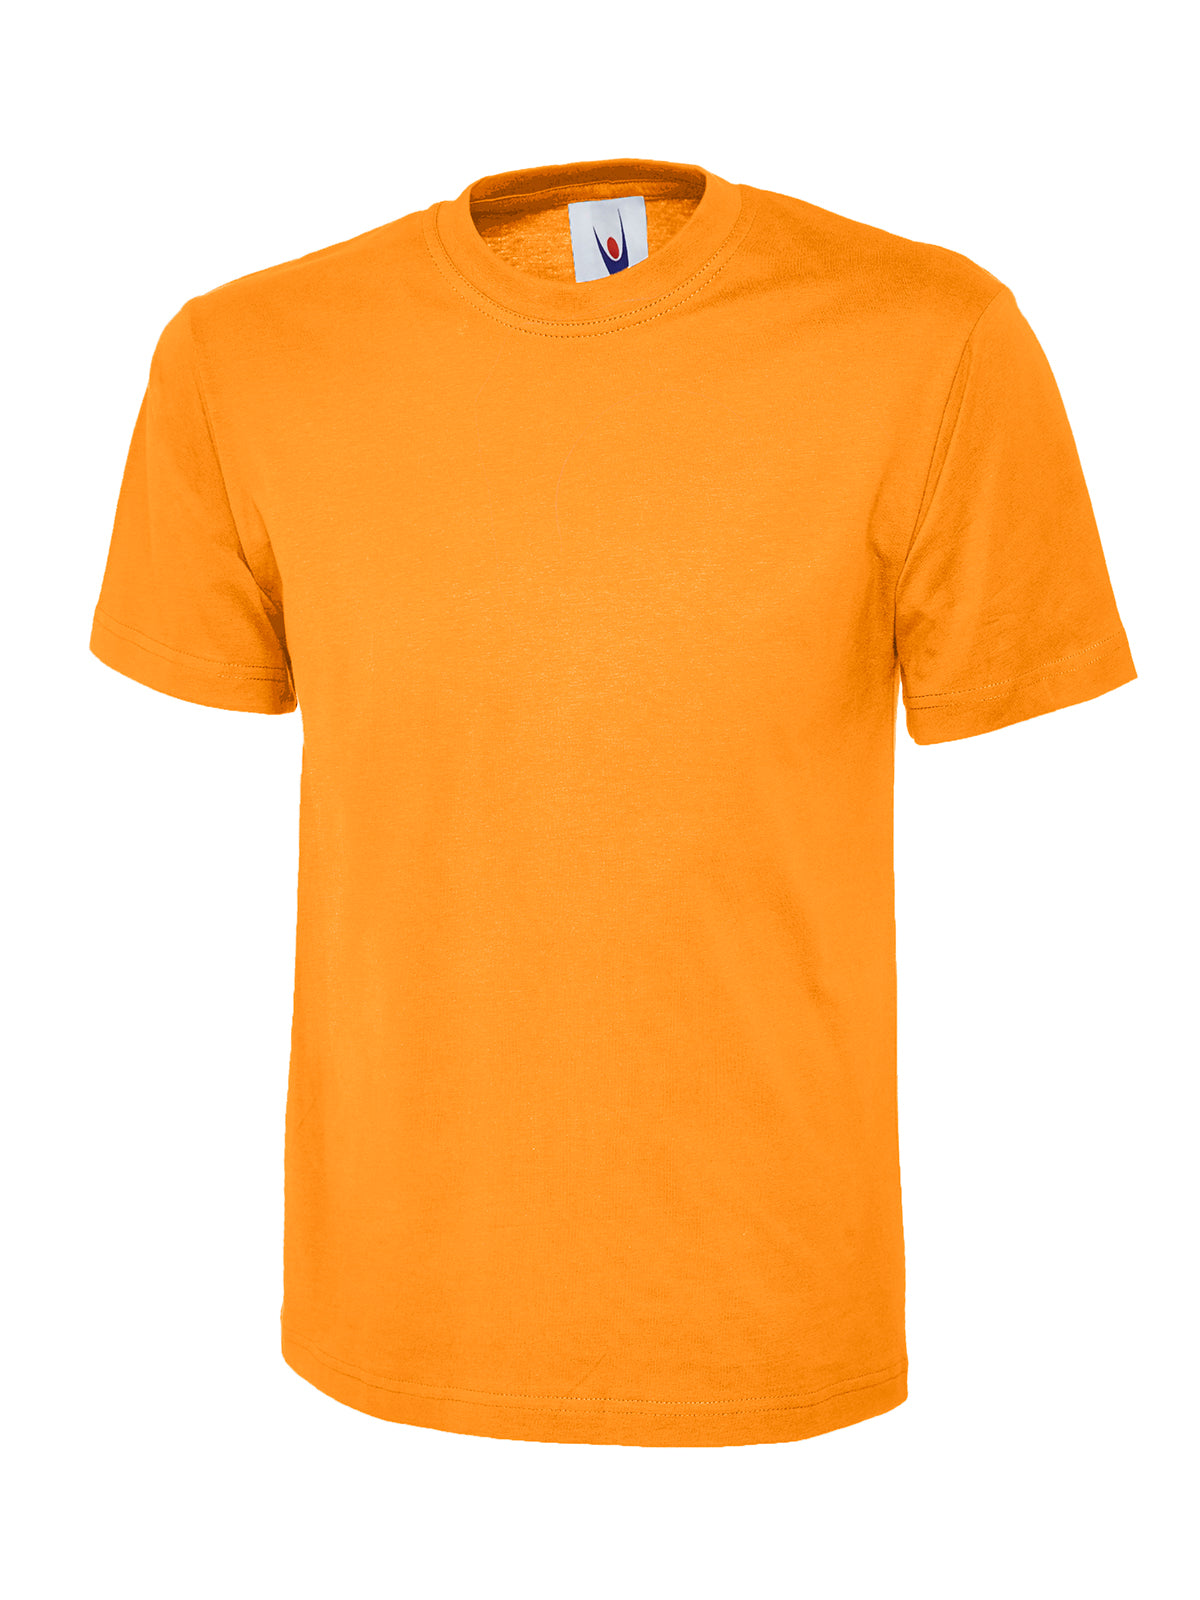 Uneek Classic T-shirt - Orange